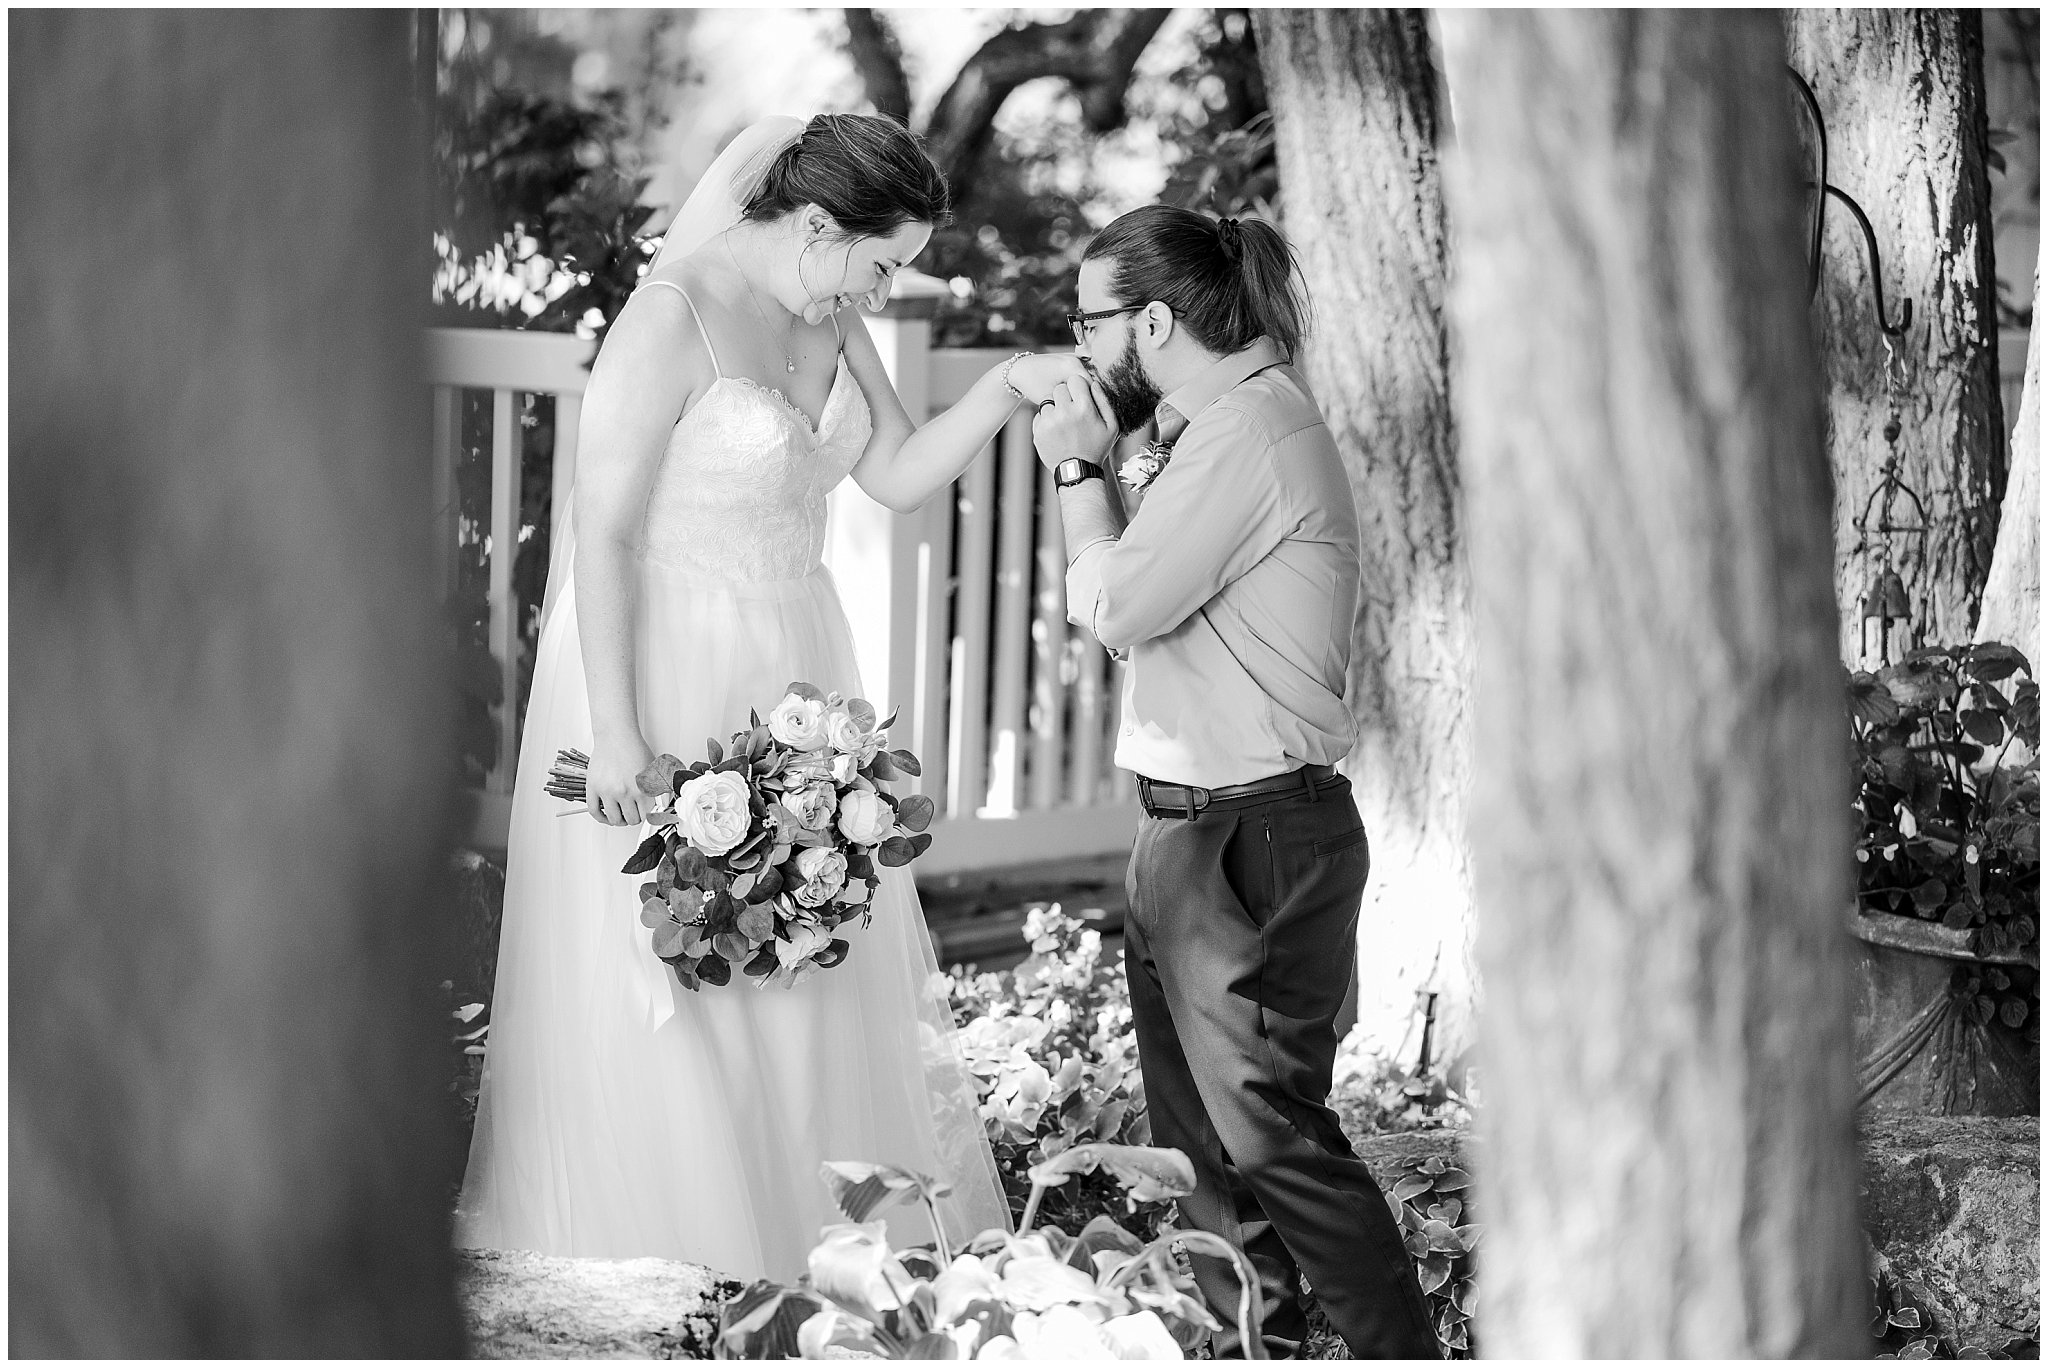 Bride and groom garden portraits | Intimate Utah Summer Garden Wedding | Jessie and Dallin Photography